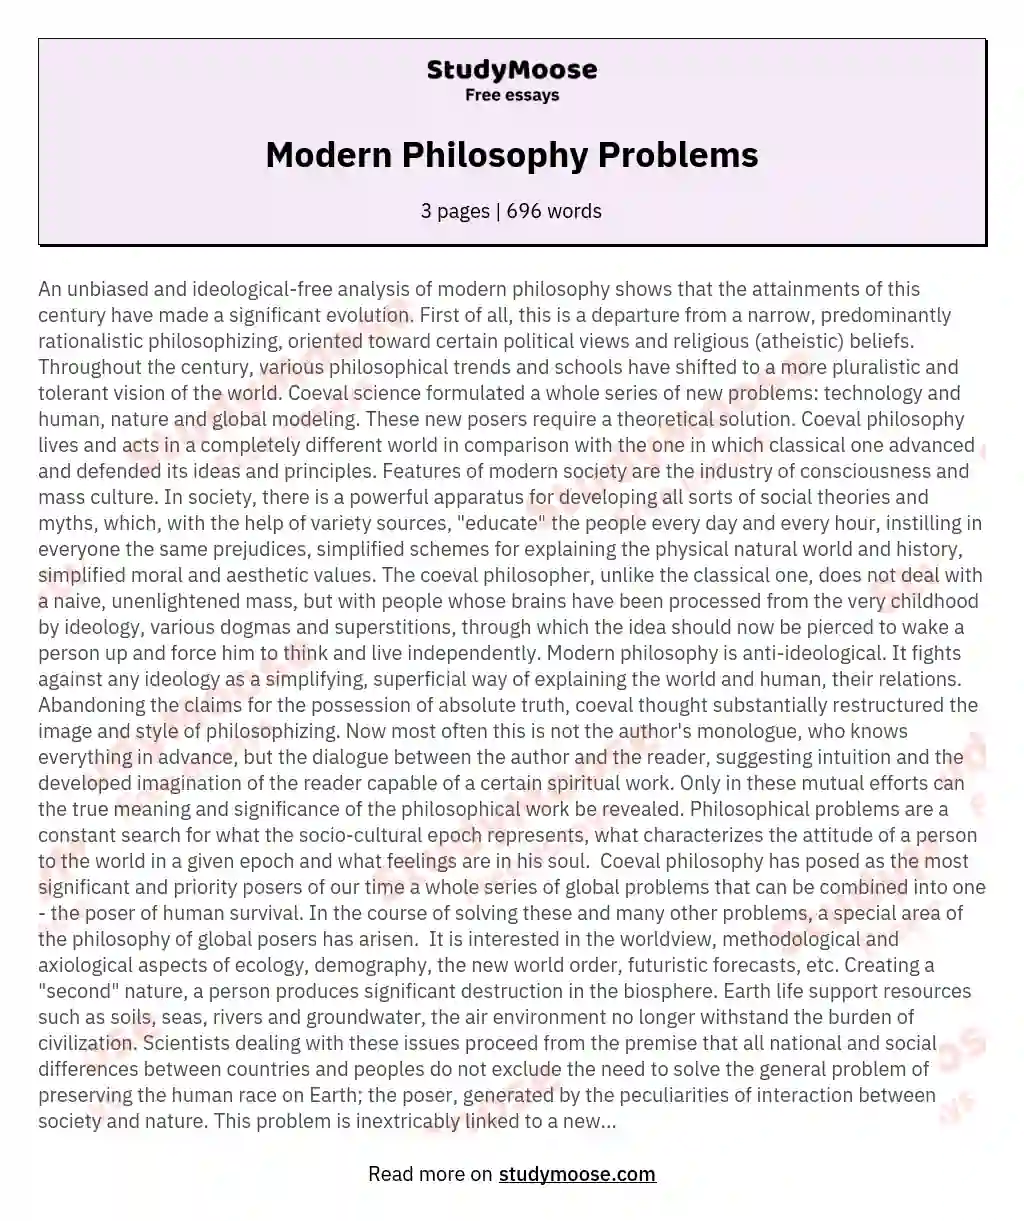 Modern Philosophy Problems essay